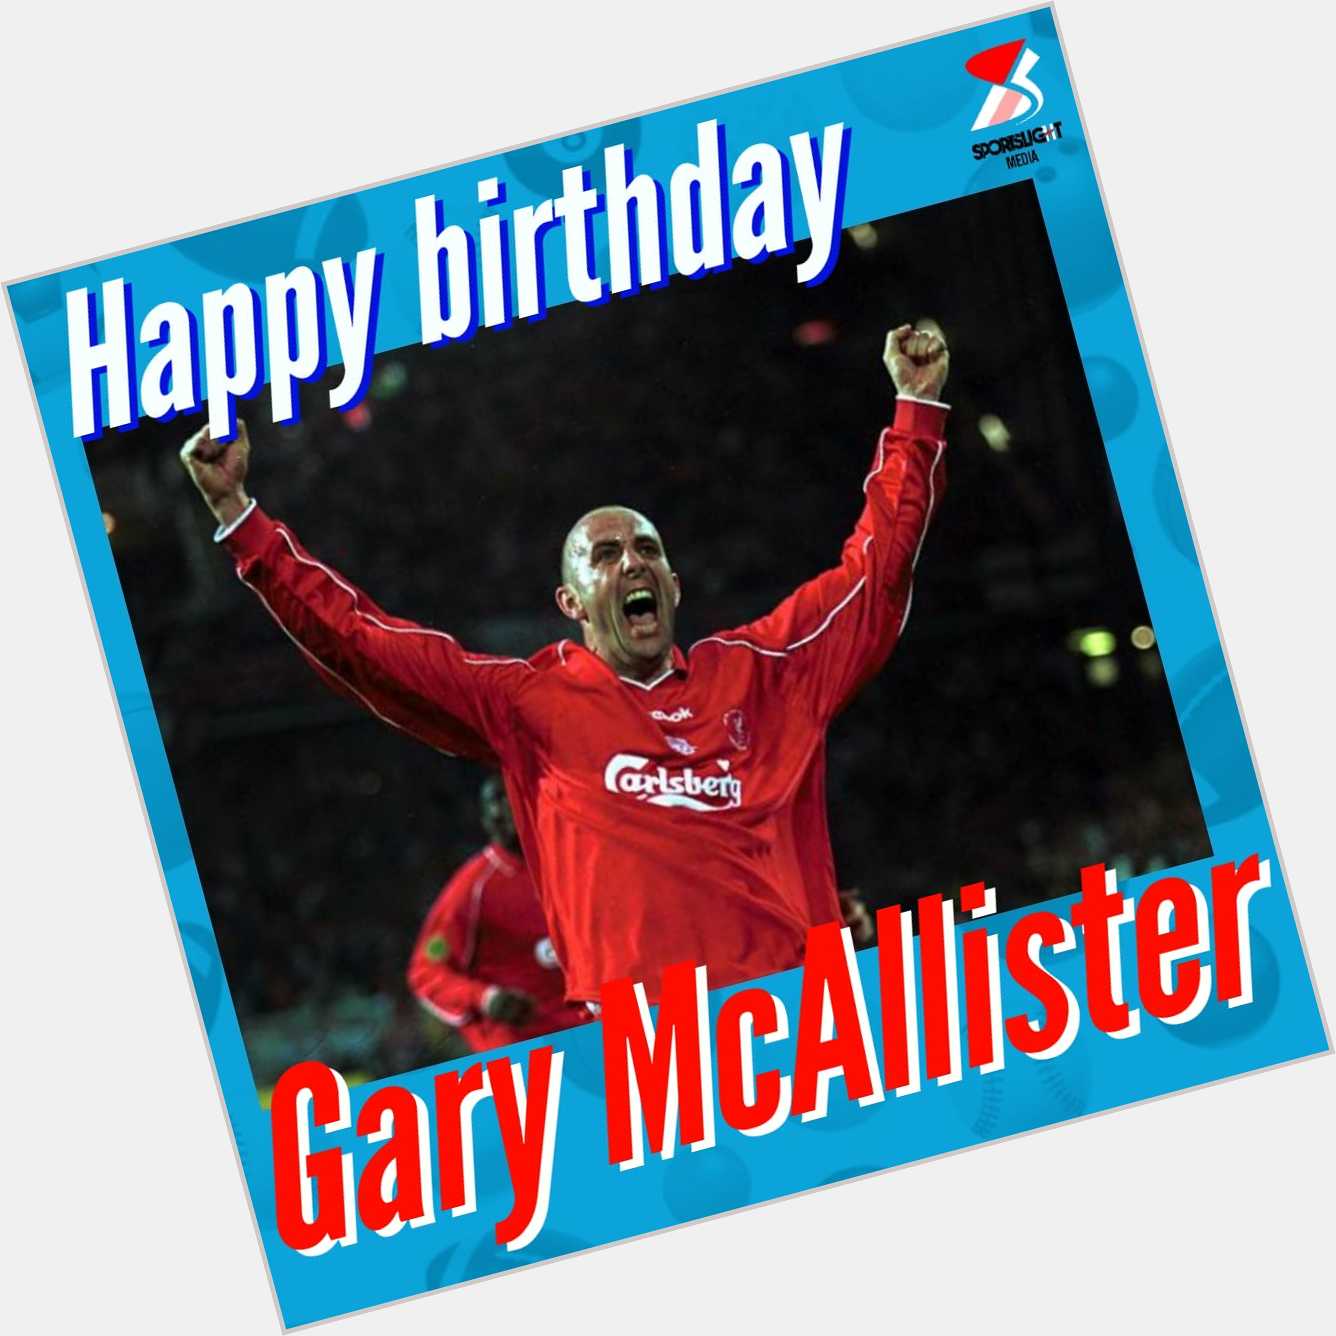 Happy birthday GARY MCALLISTER !!   